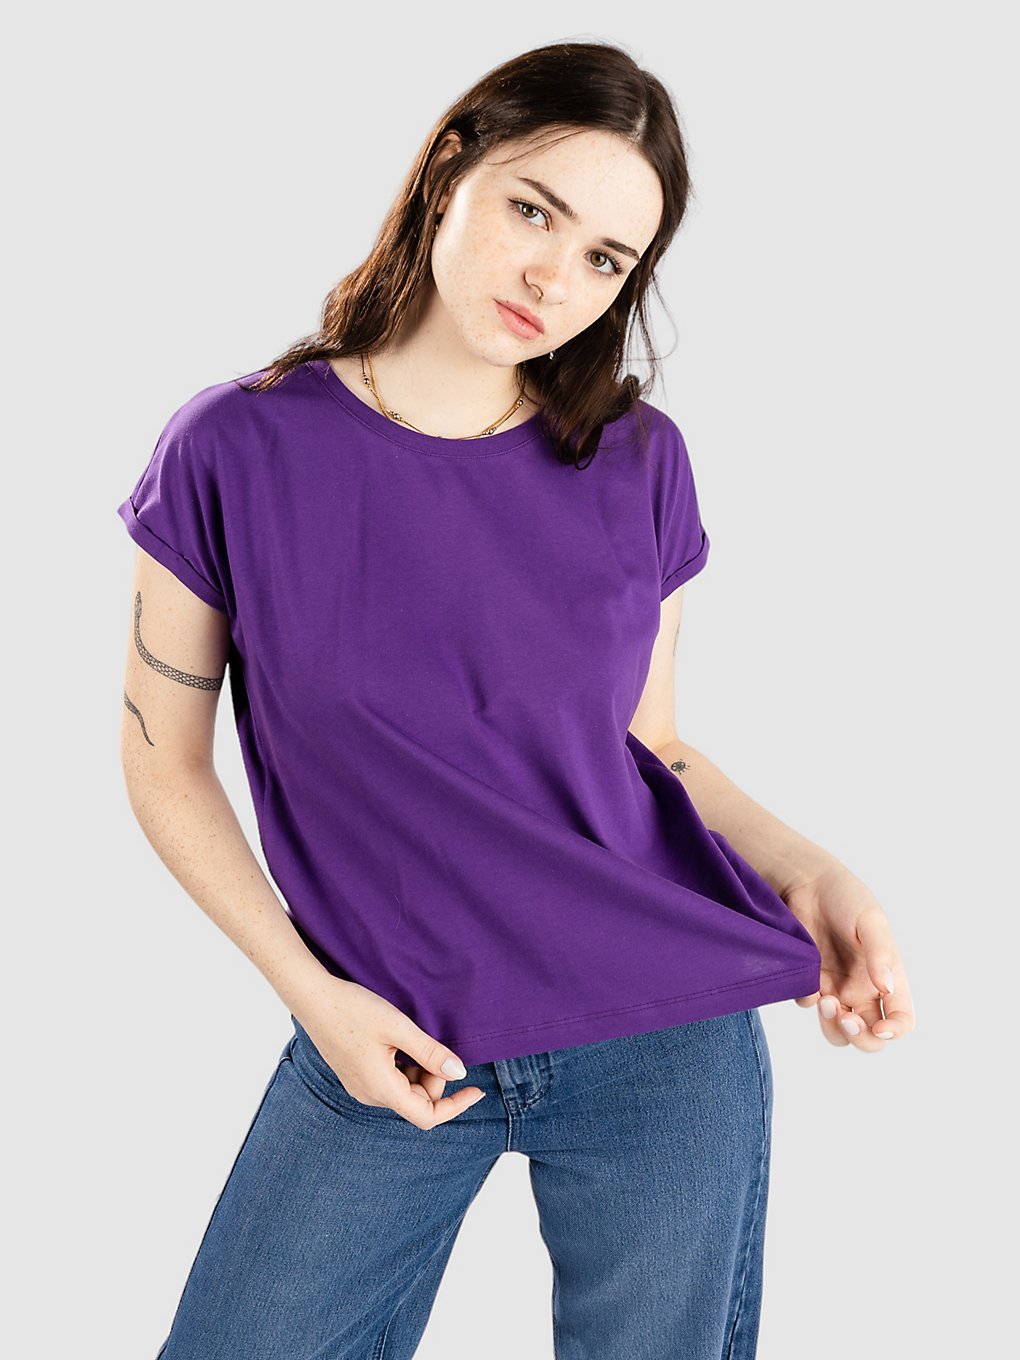 Nümph Nubeverly T-shirt tillandsia Purple kaufen